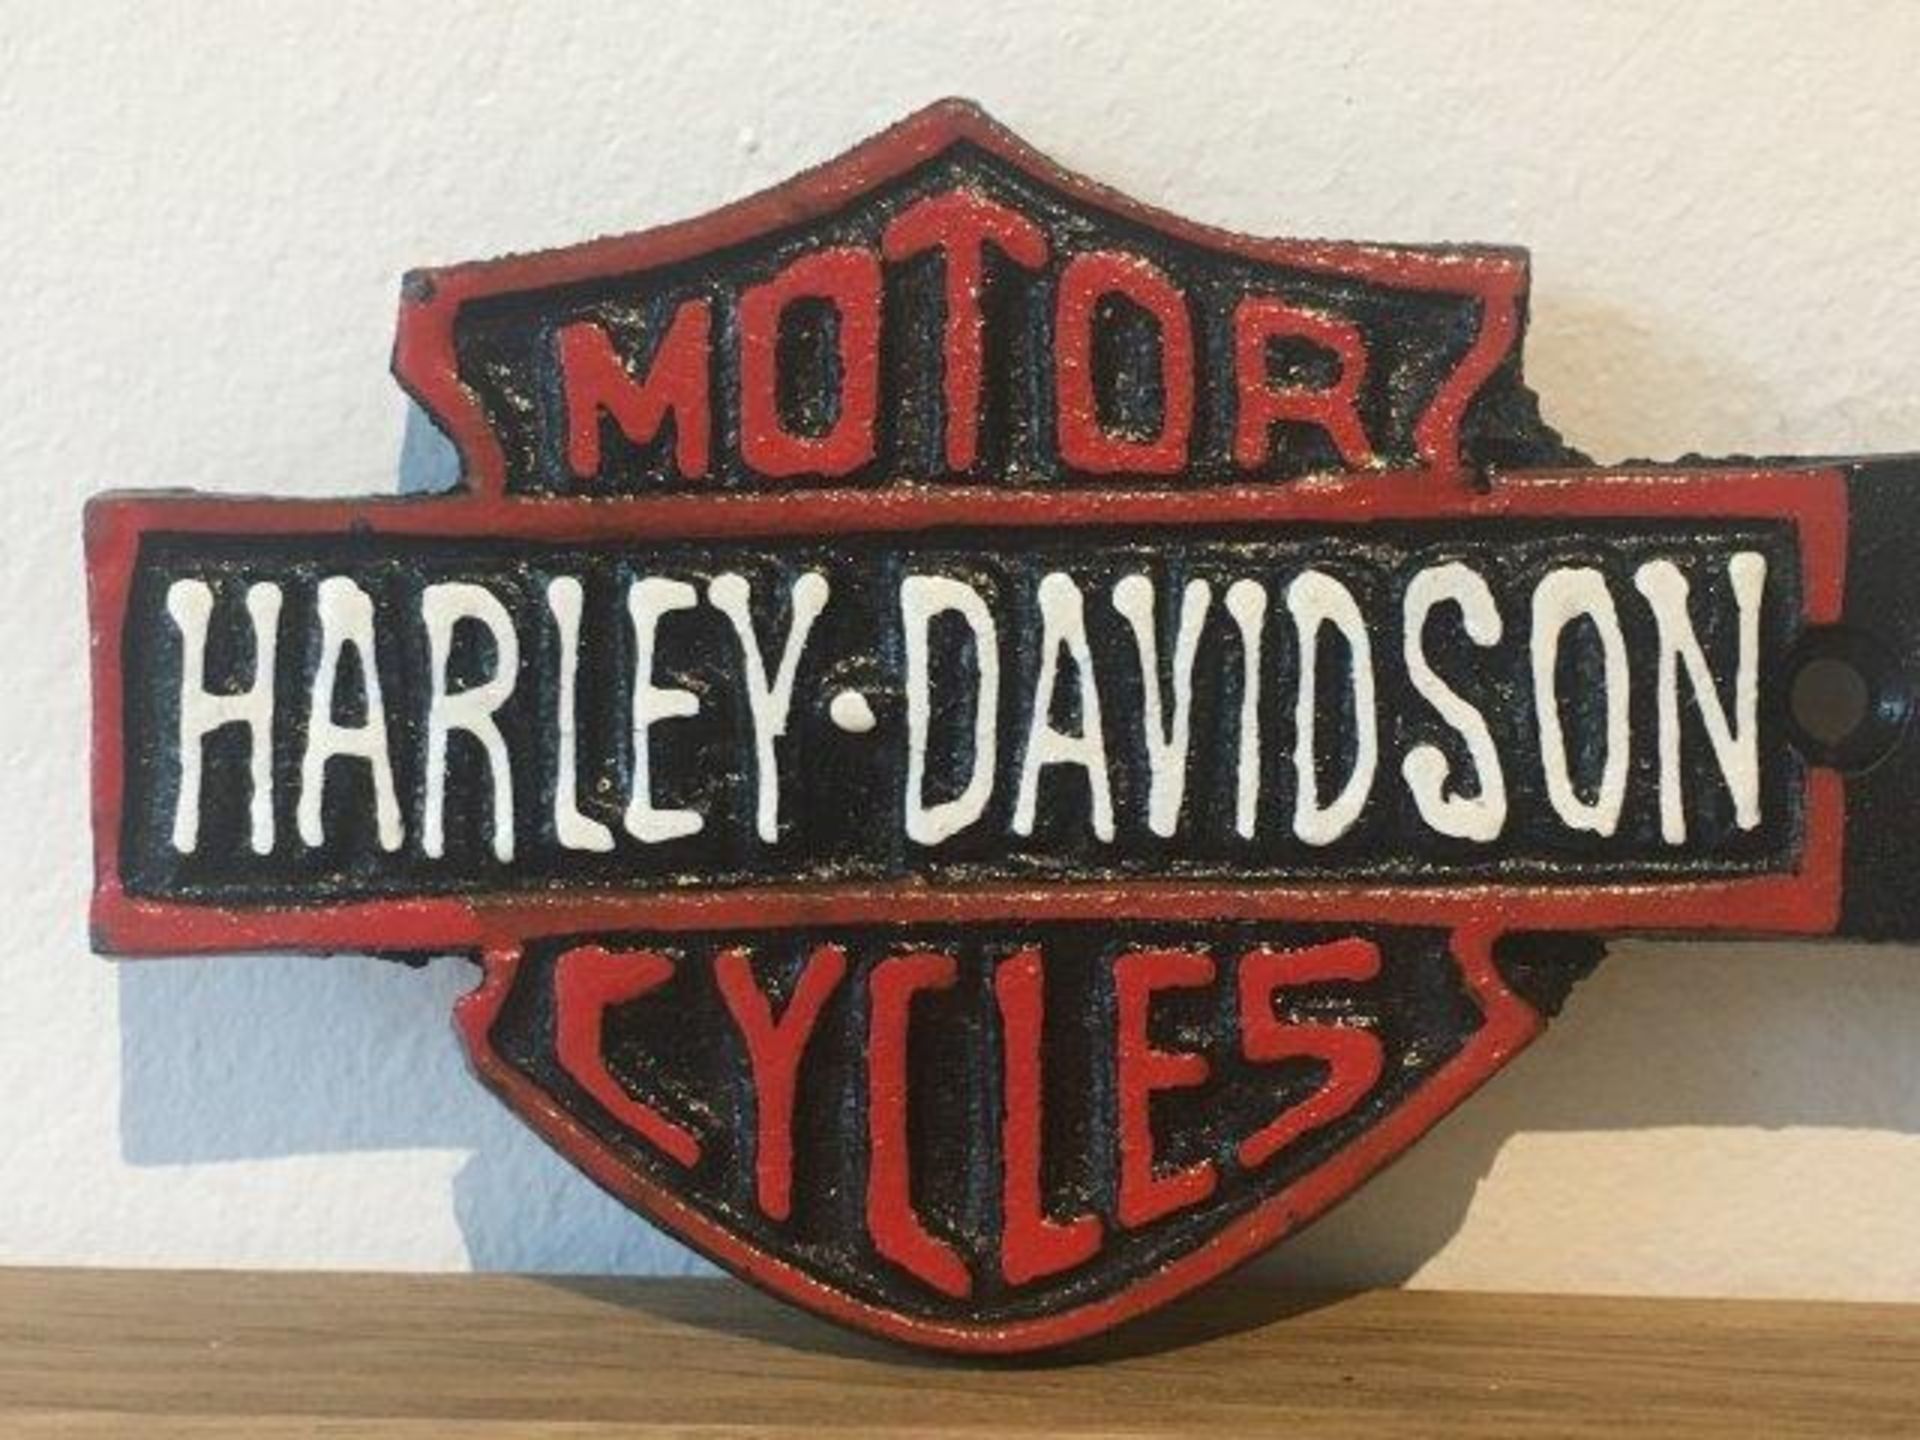 Harley Davidson Motorcycles Cast Iron Garage Arrow Sign - Image 2 of 4